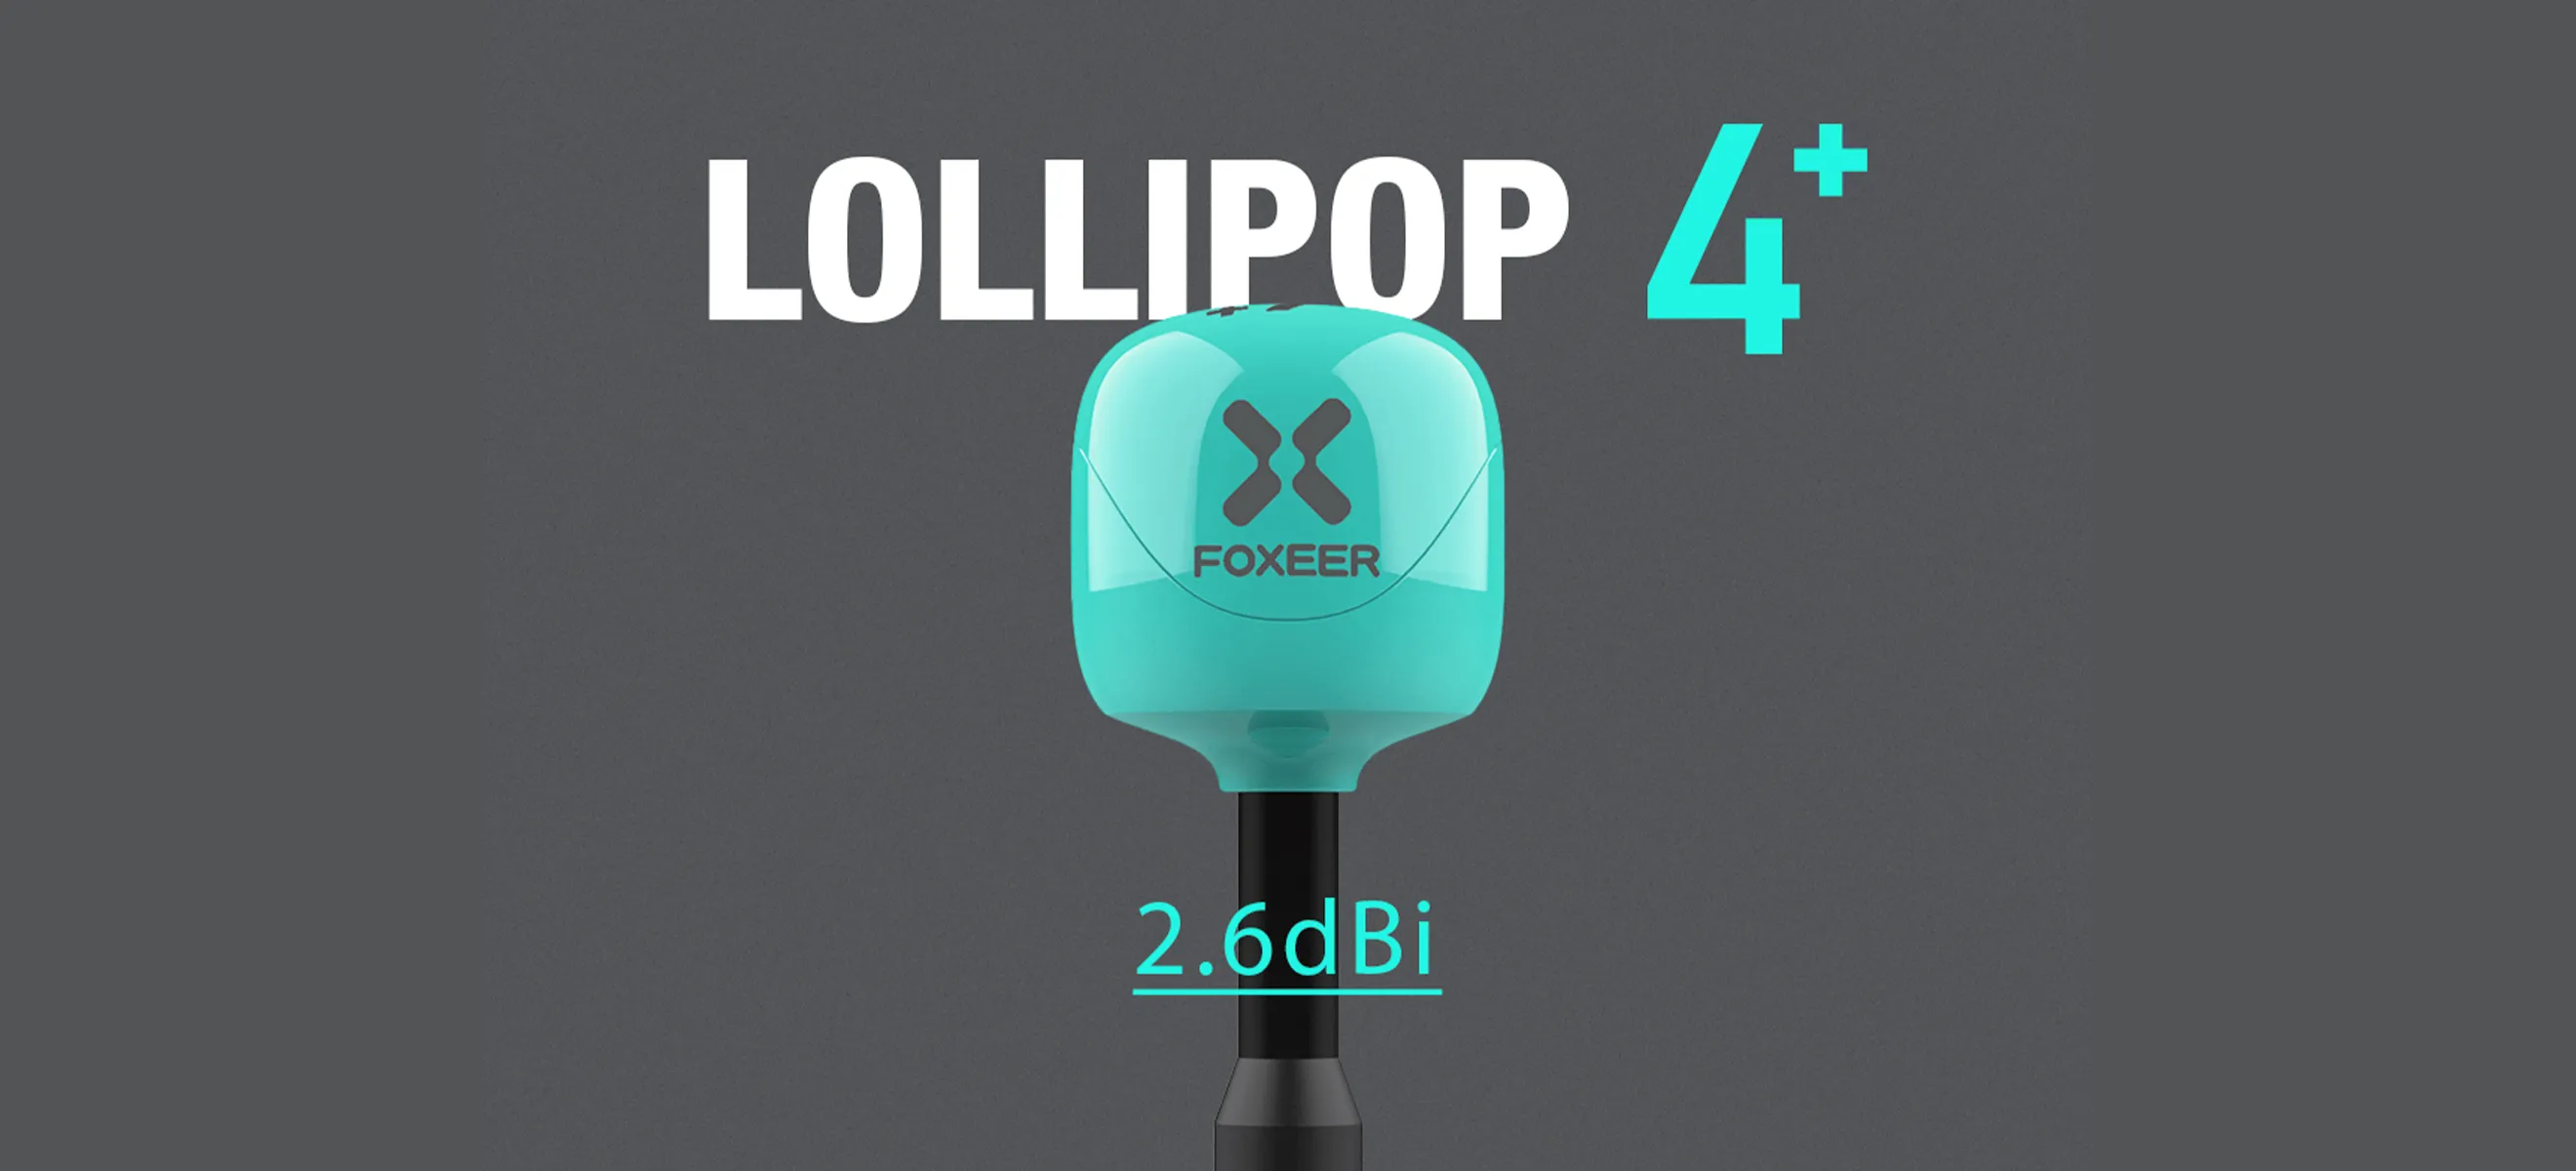 Foxeer lollipop 4 plus antenna for fpv drone